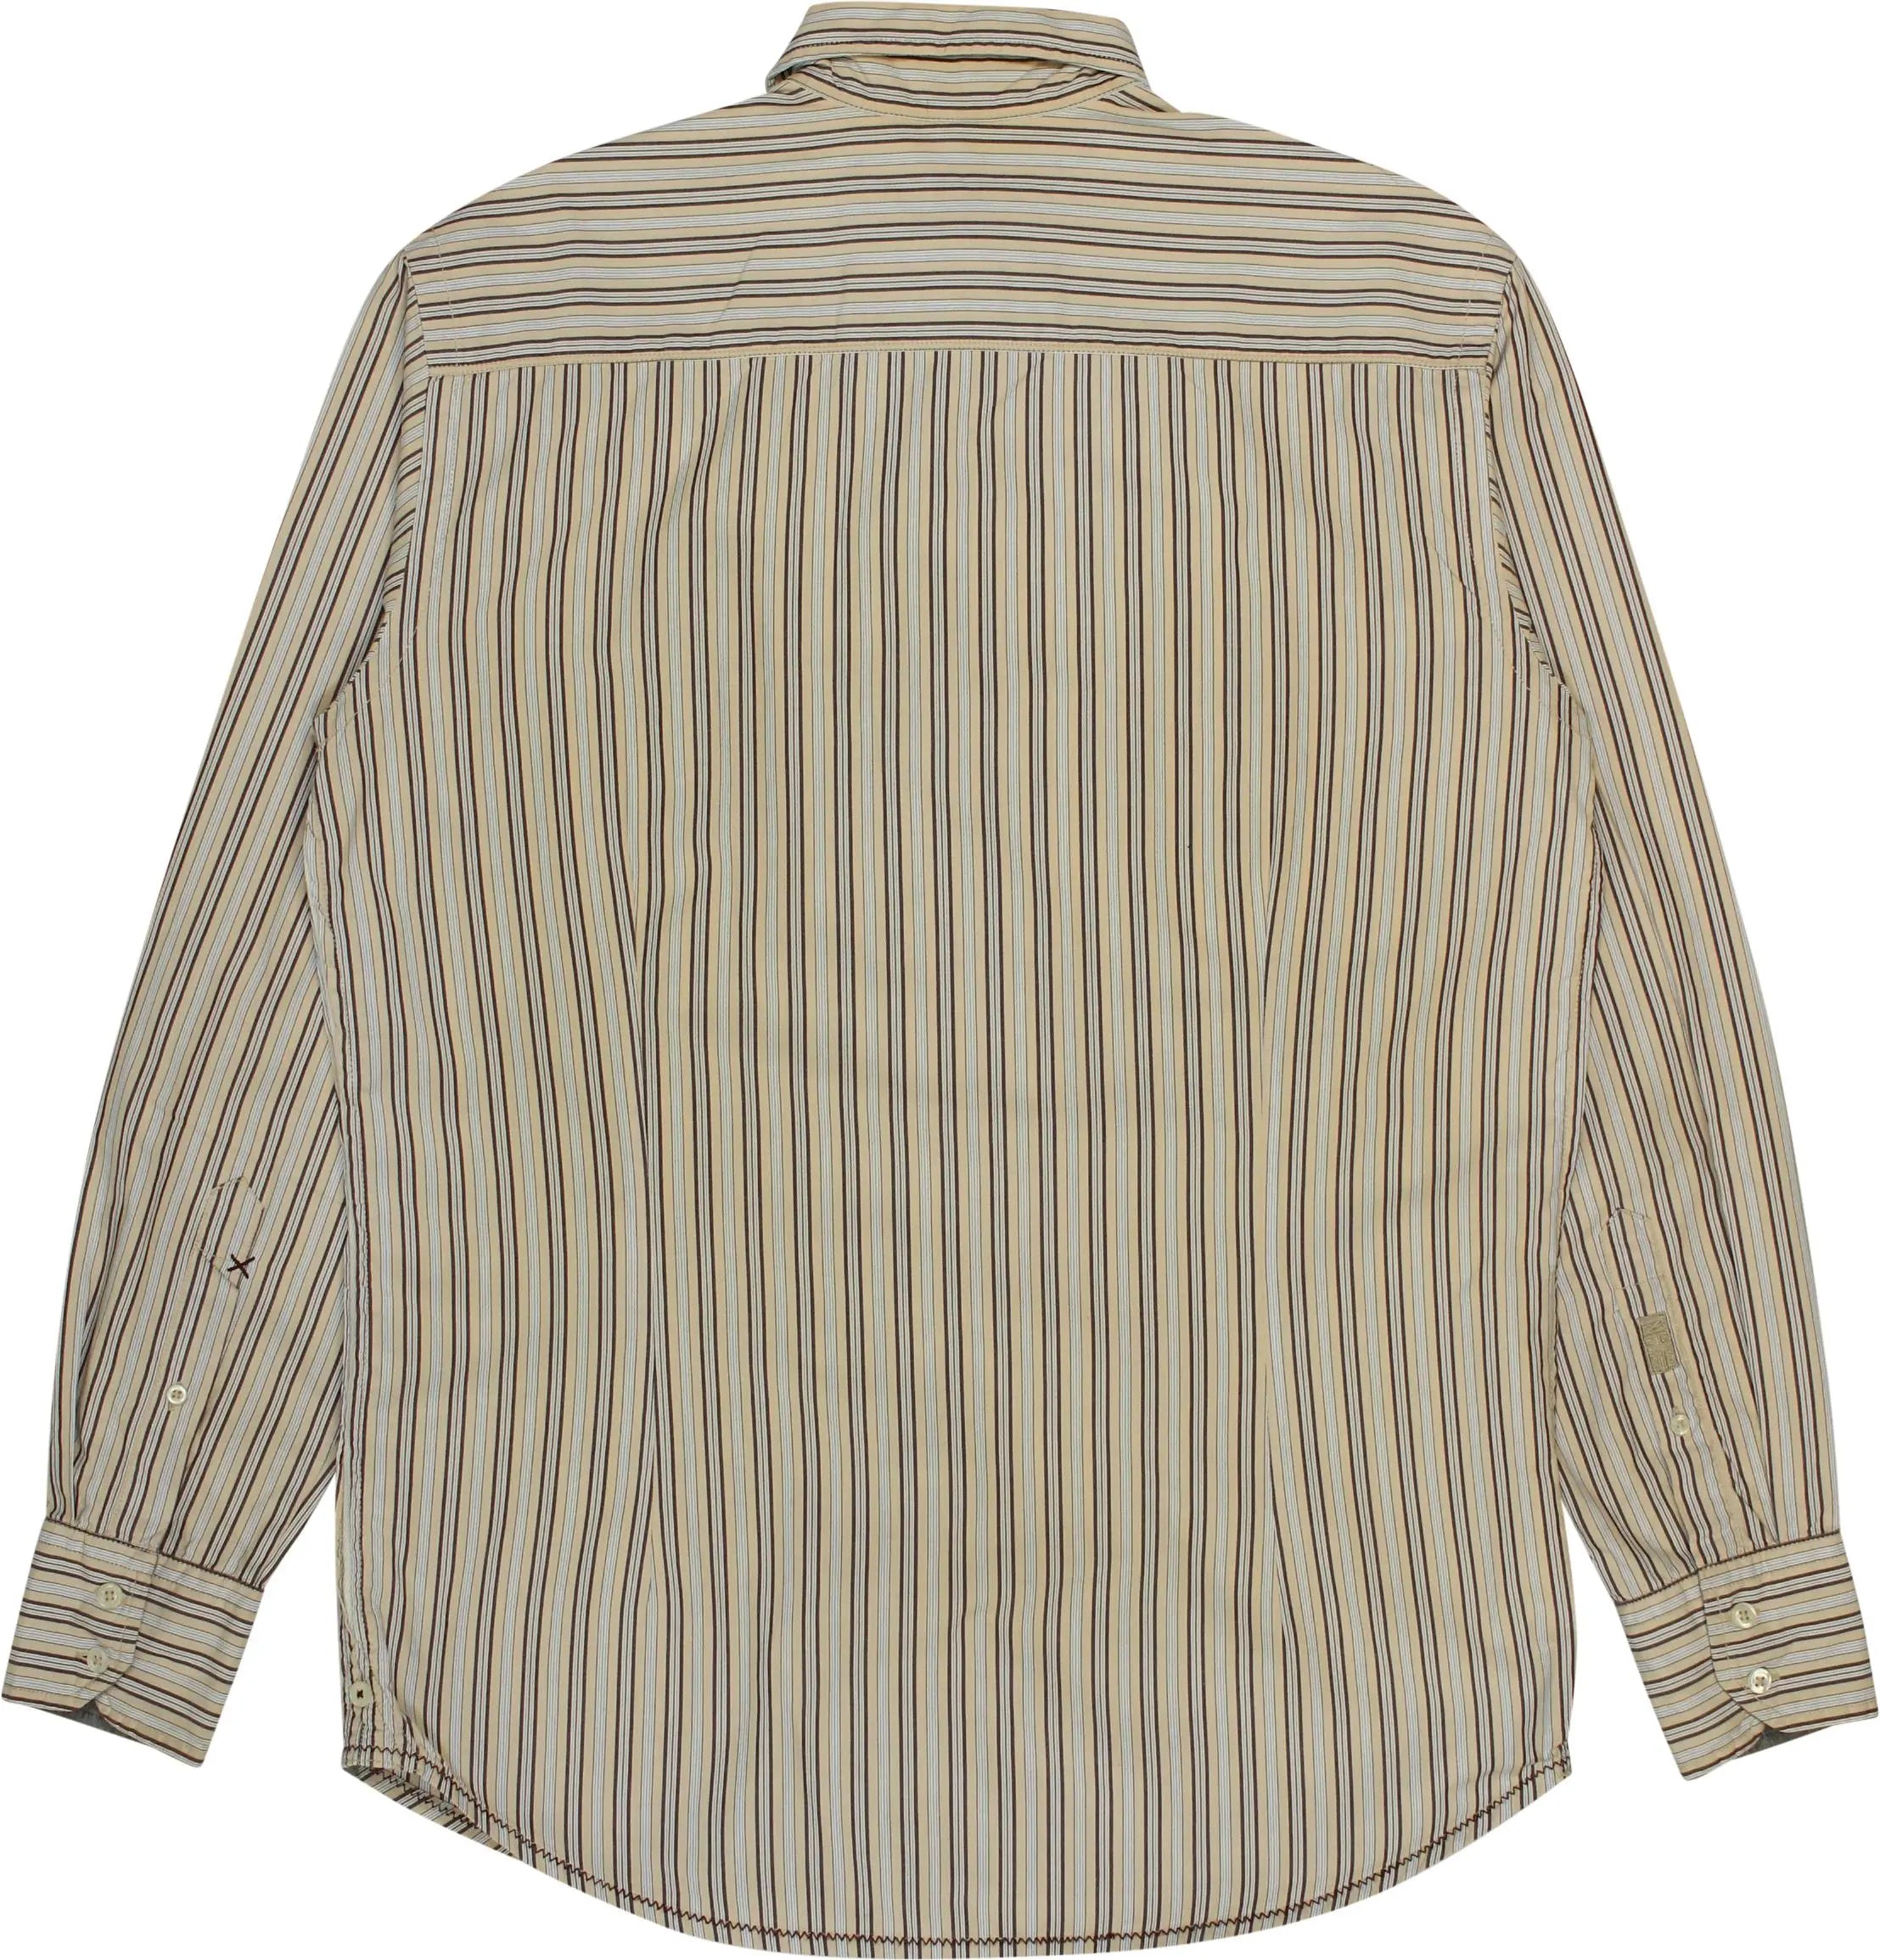 Napapijri - Vintage Striped Shirt by Napapijri- ThriftTale.com - Vintage and second handclothing